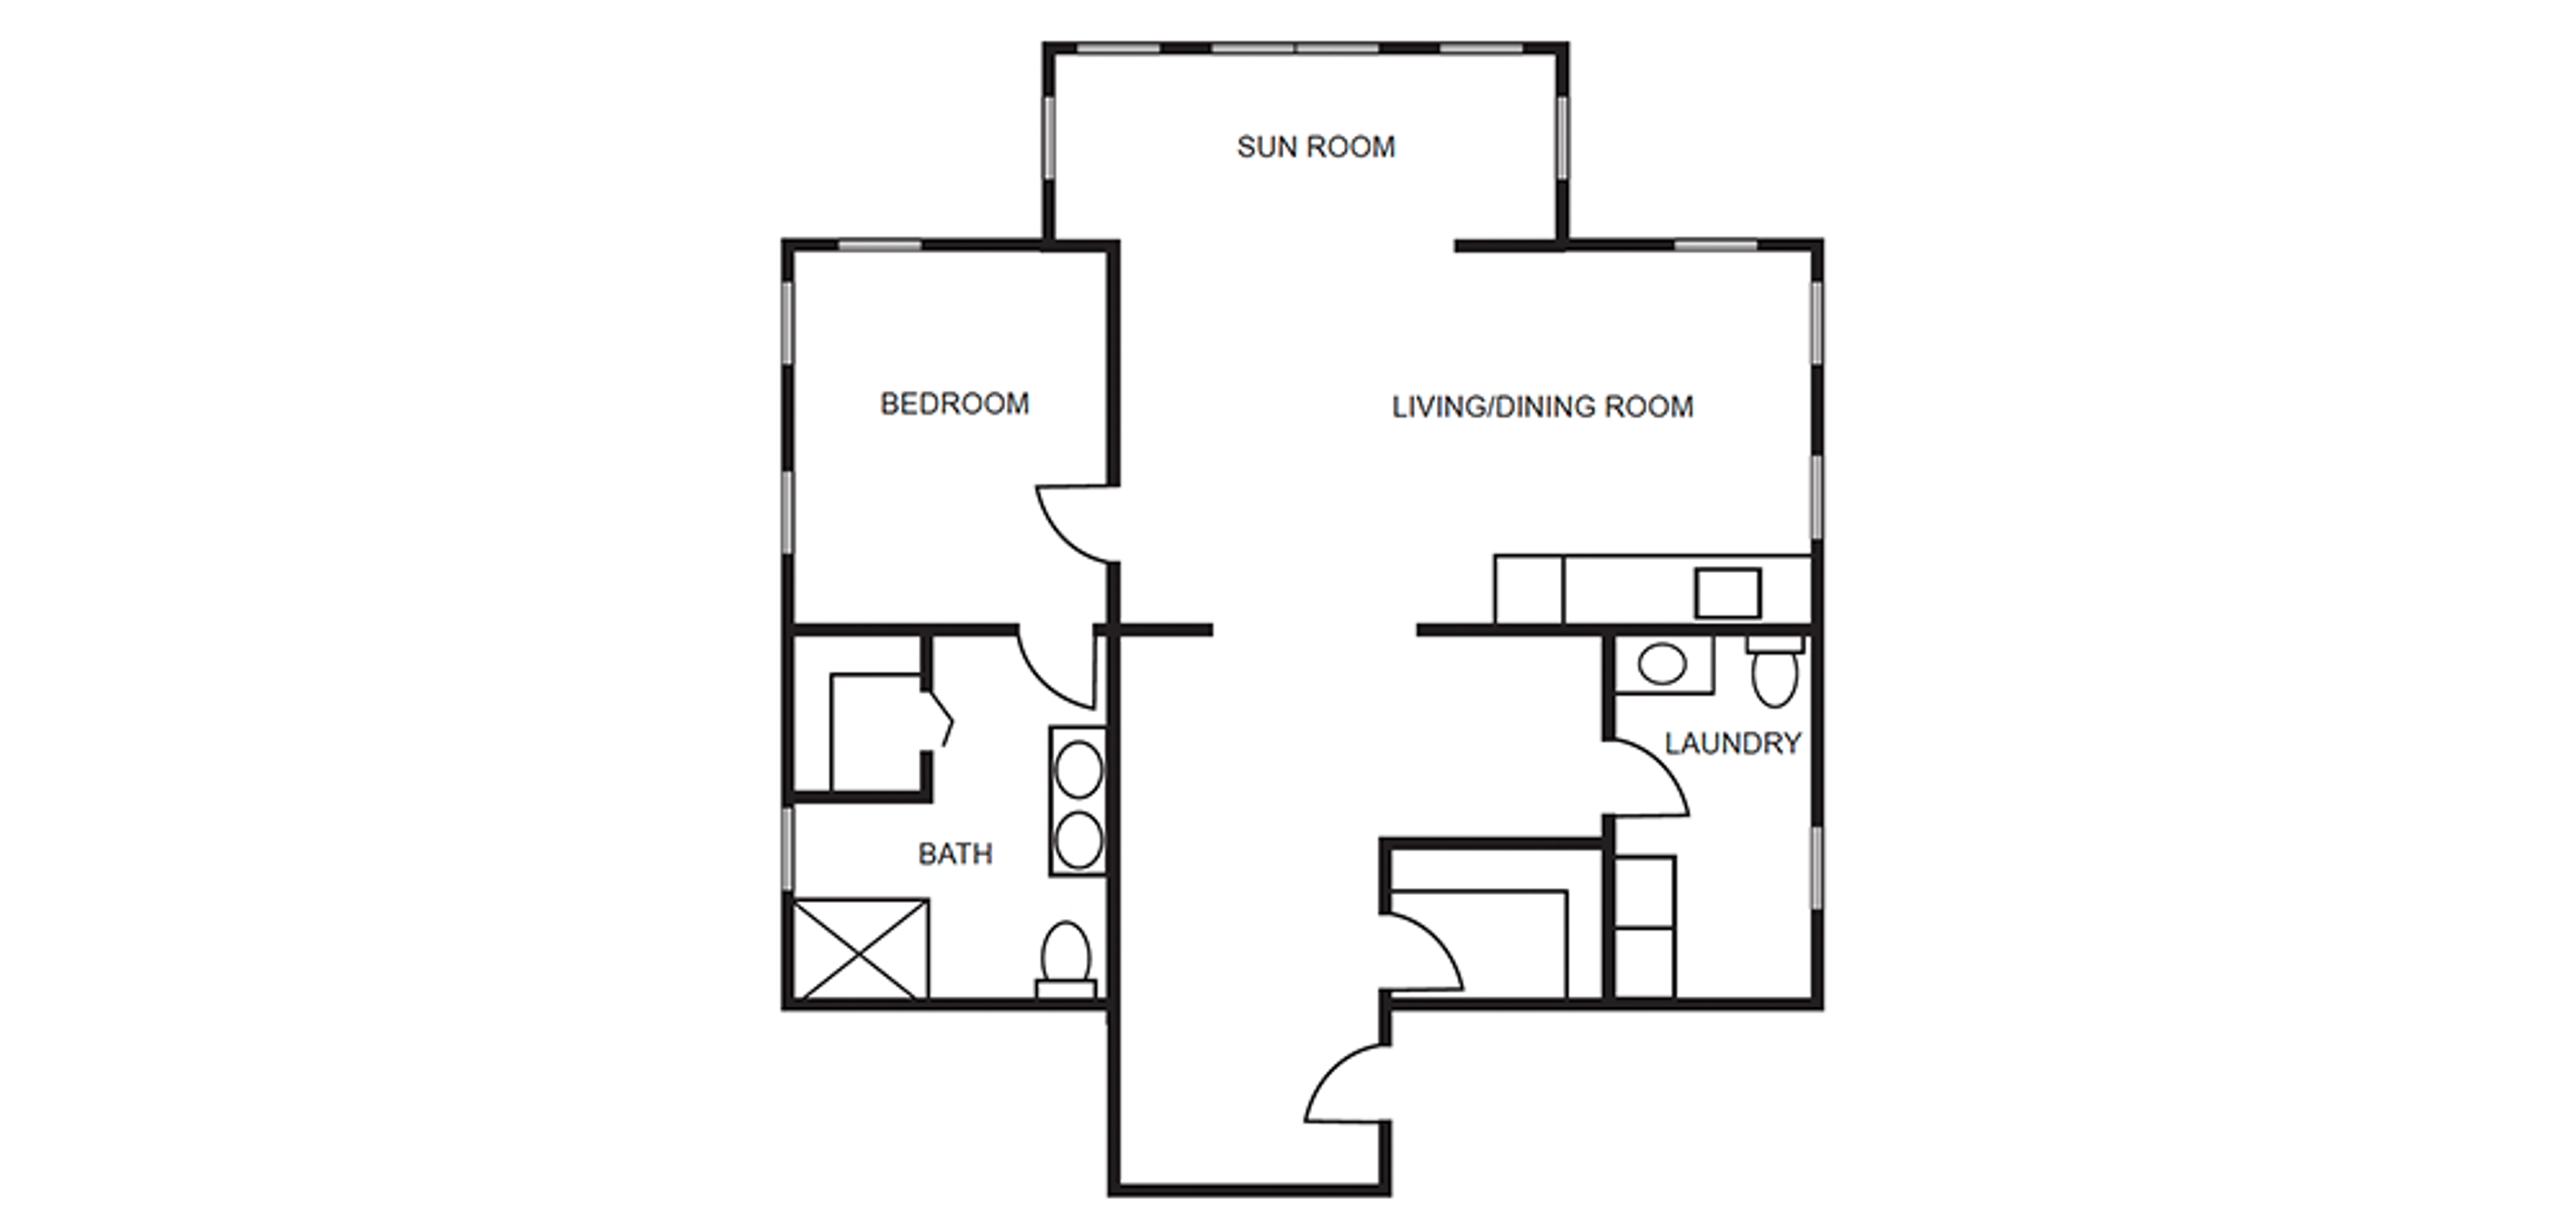 Floor Plans - Crescent Landing at Hattiesburg - Assisted Living - One Bedroom Suite